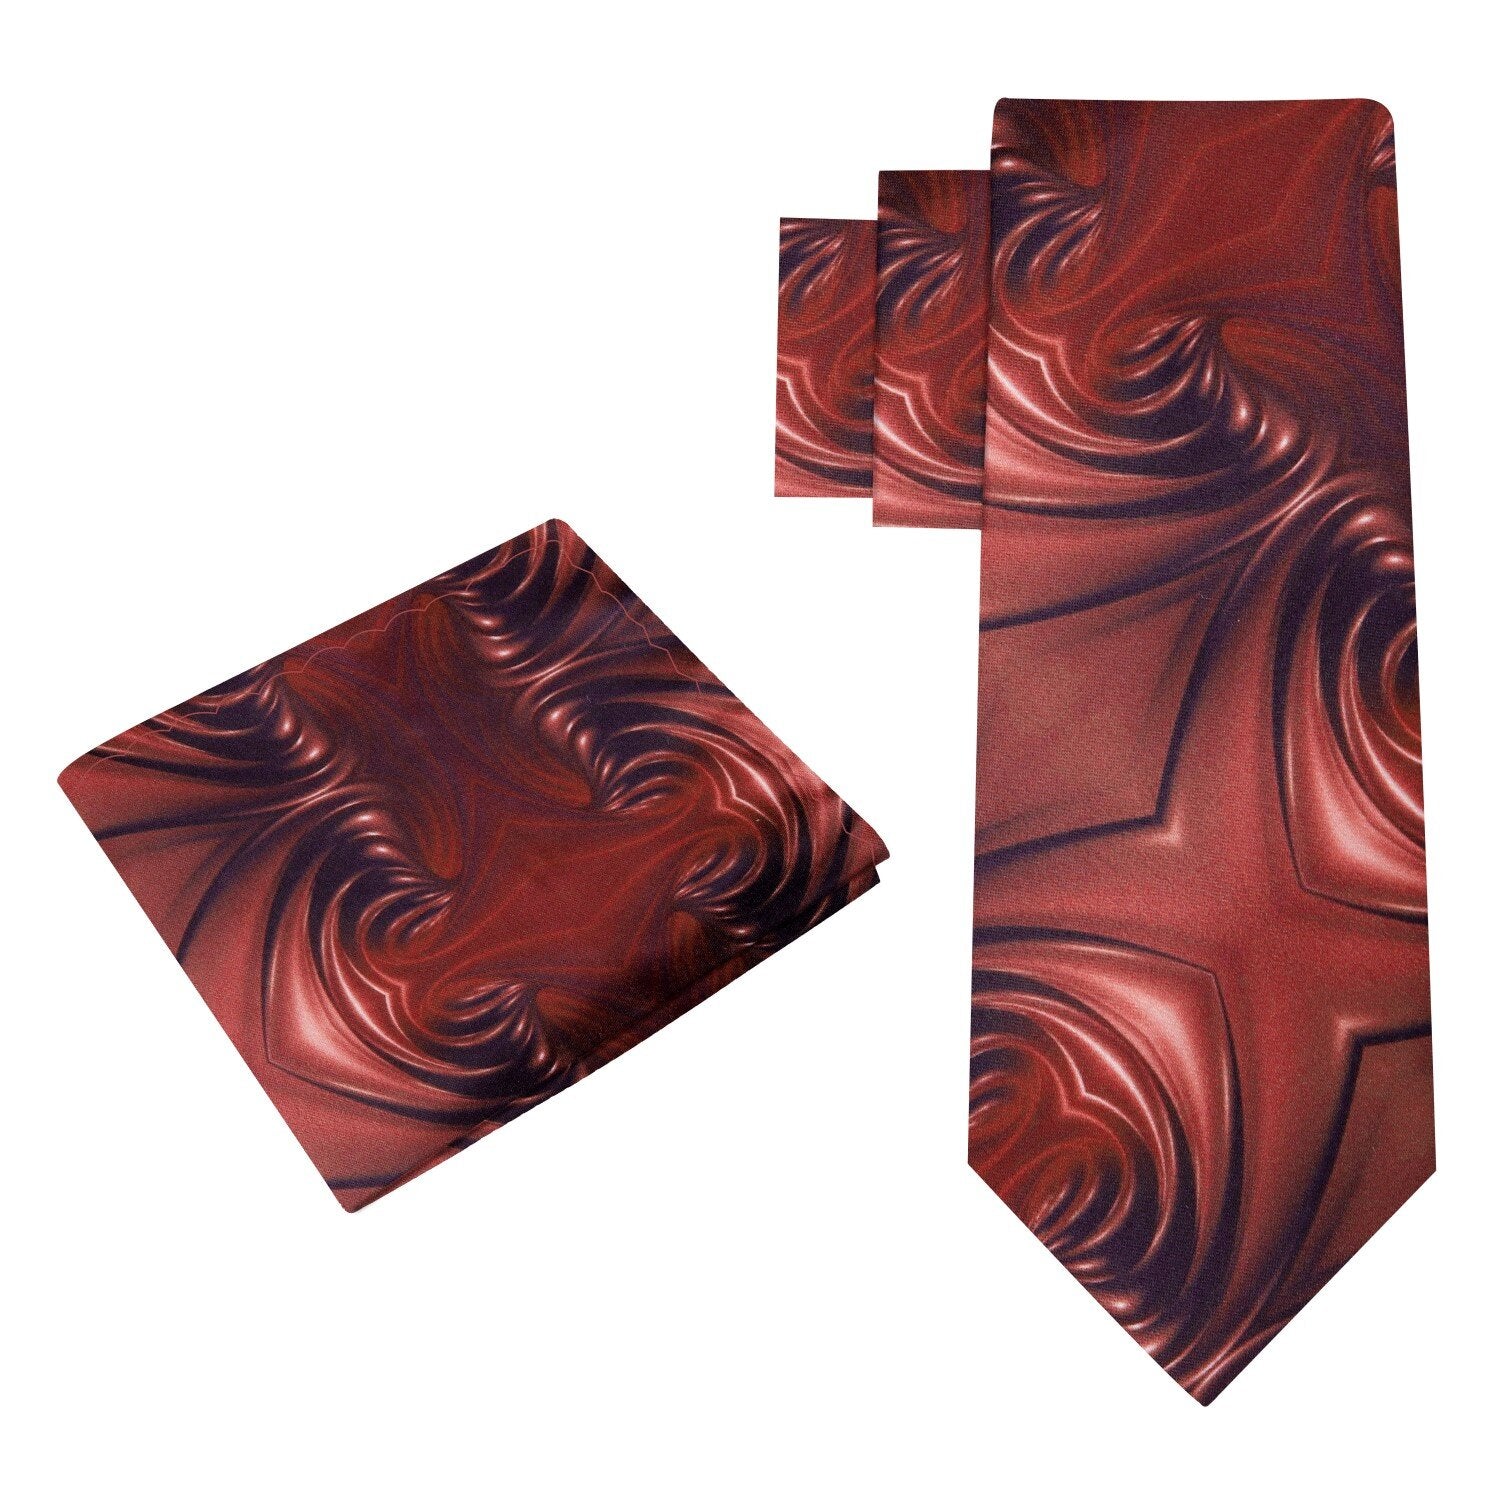 Alt View: Silky Smooth Chocolate Swirl Tie